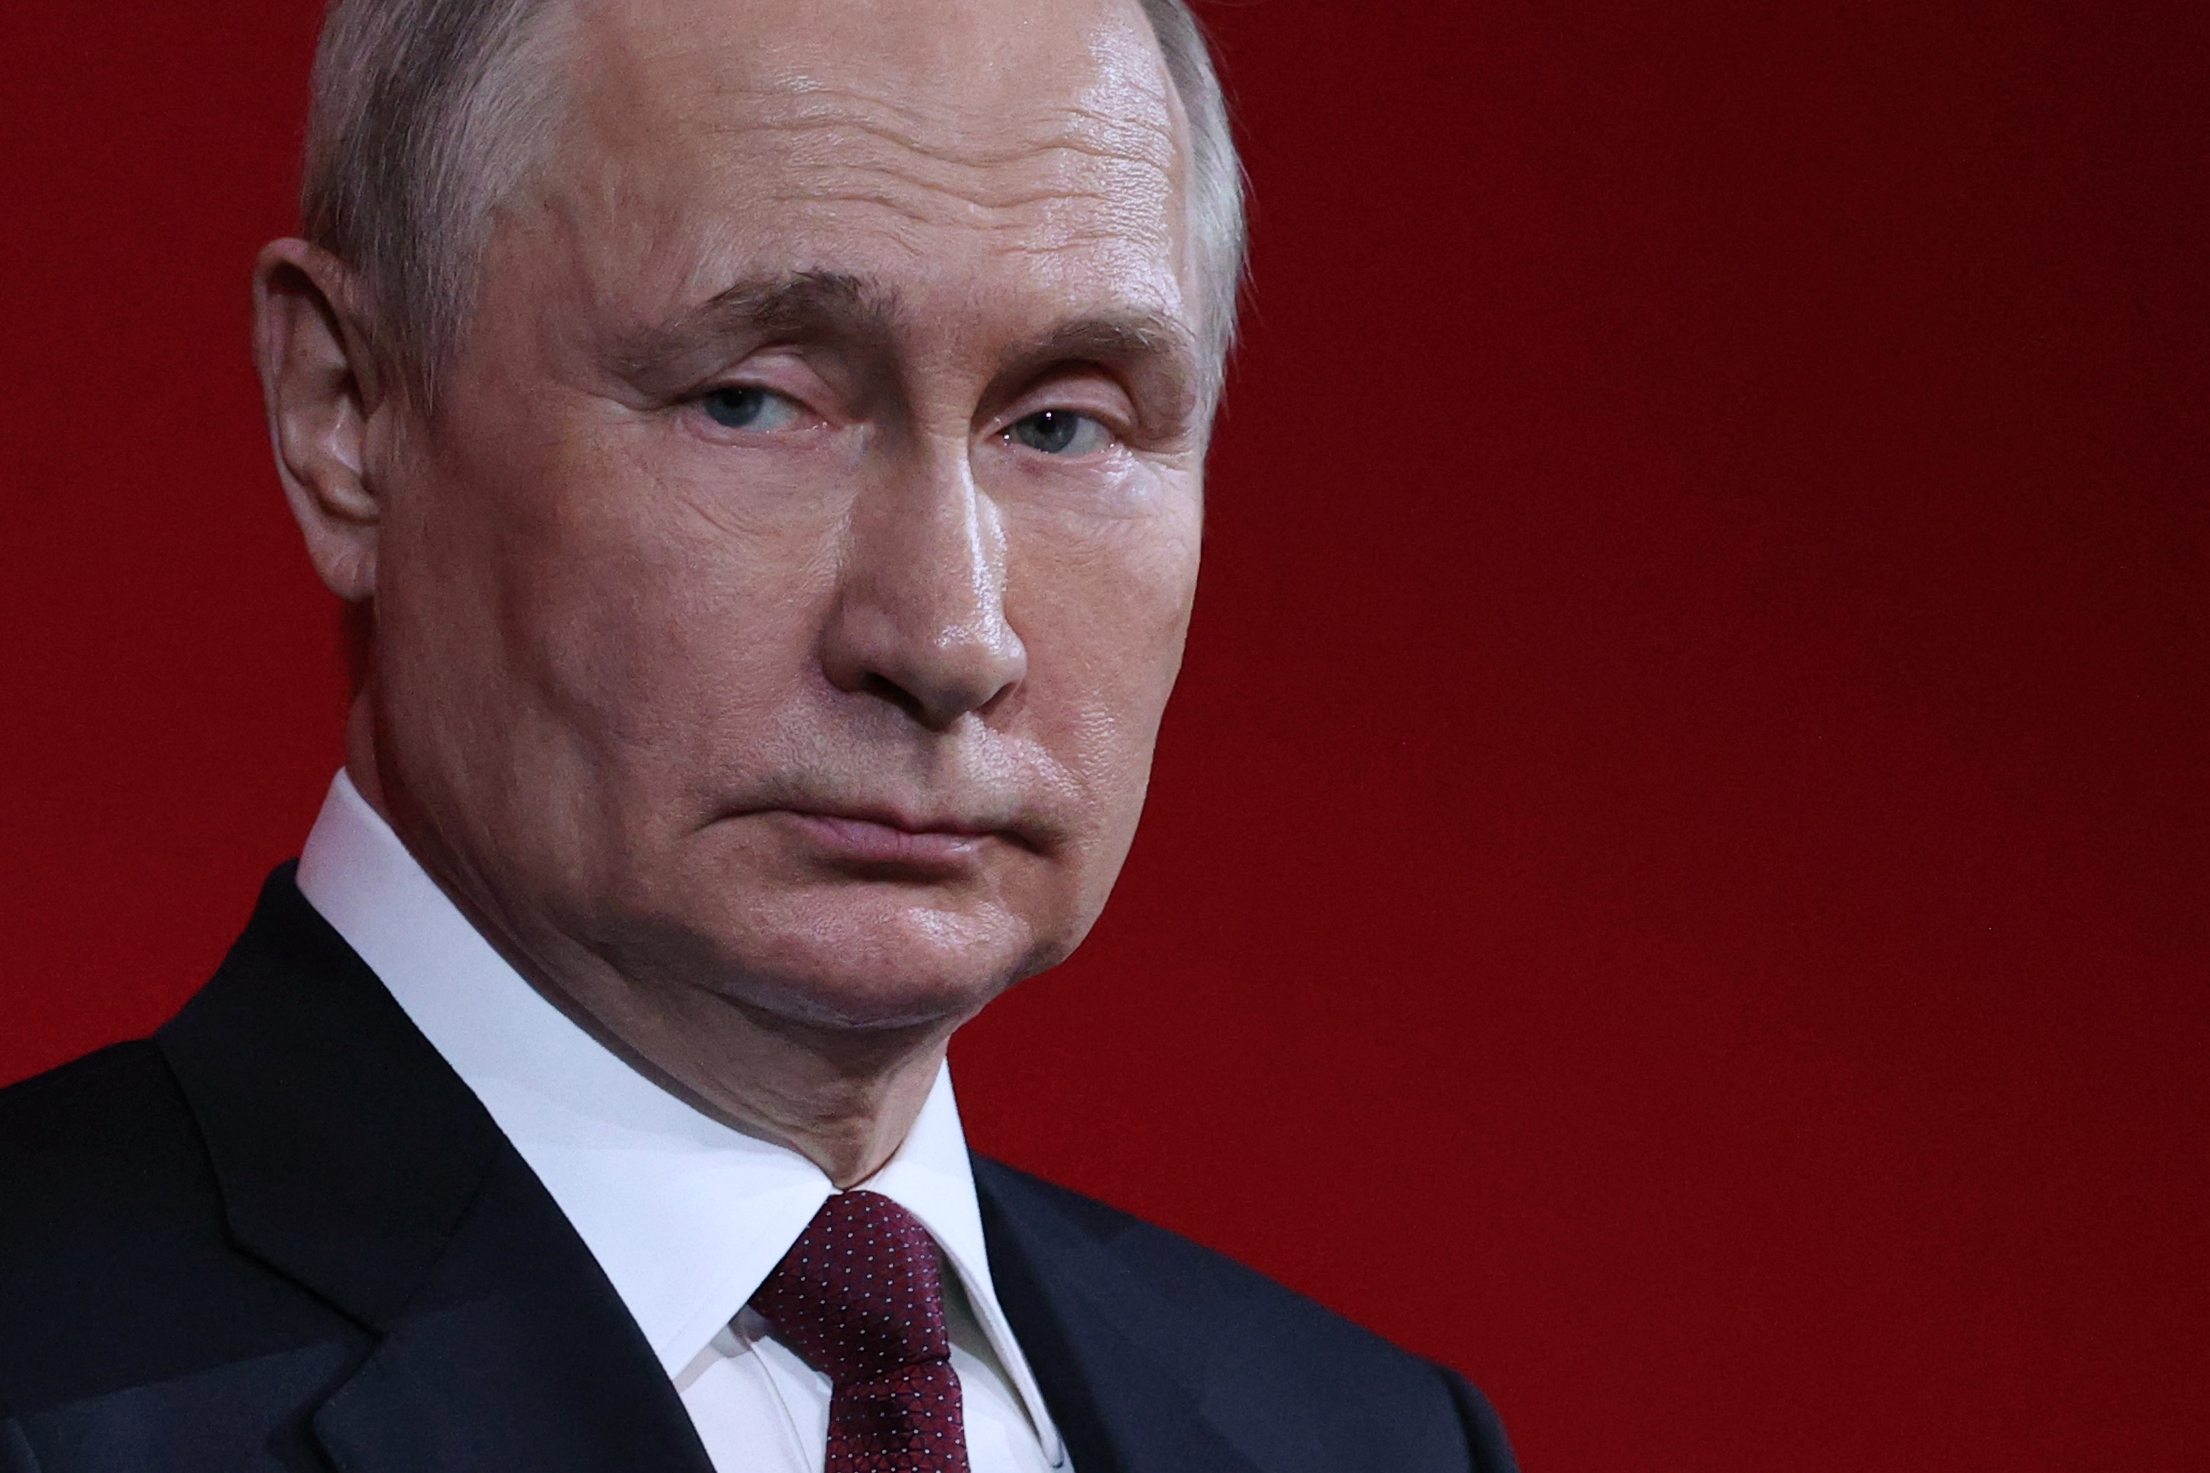 Vladimir Putin Might Avoid Speaking To Public Amid Ukraine Disaster Report